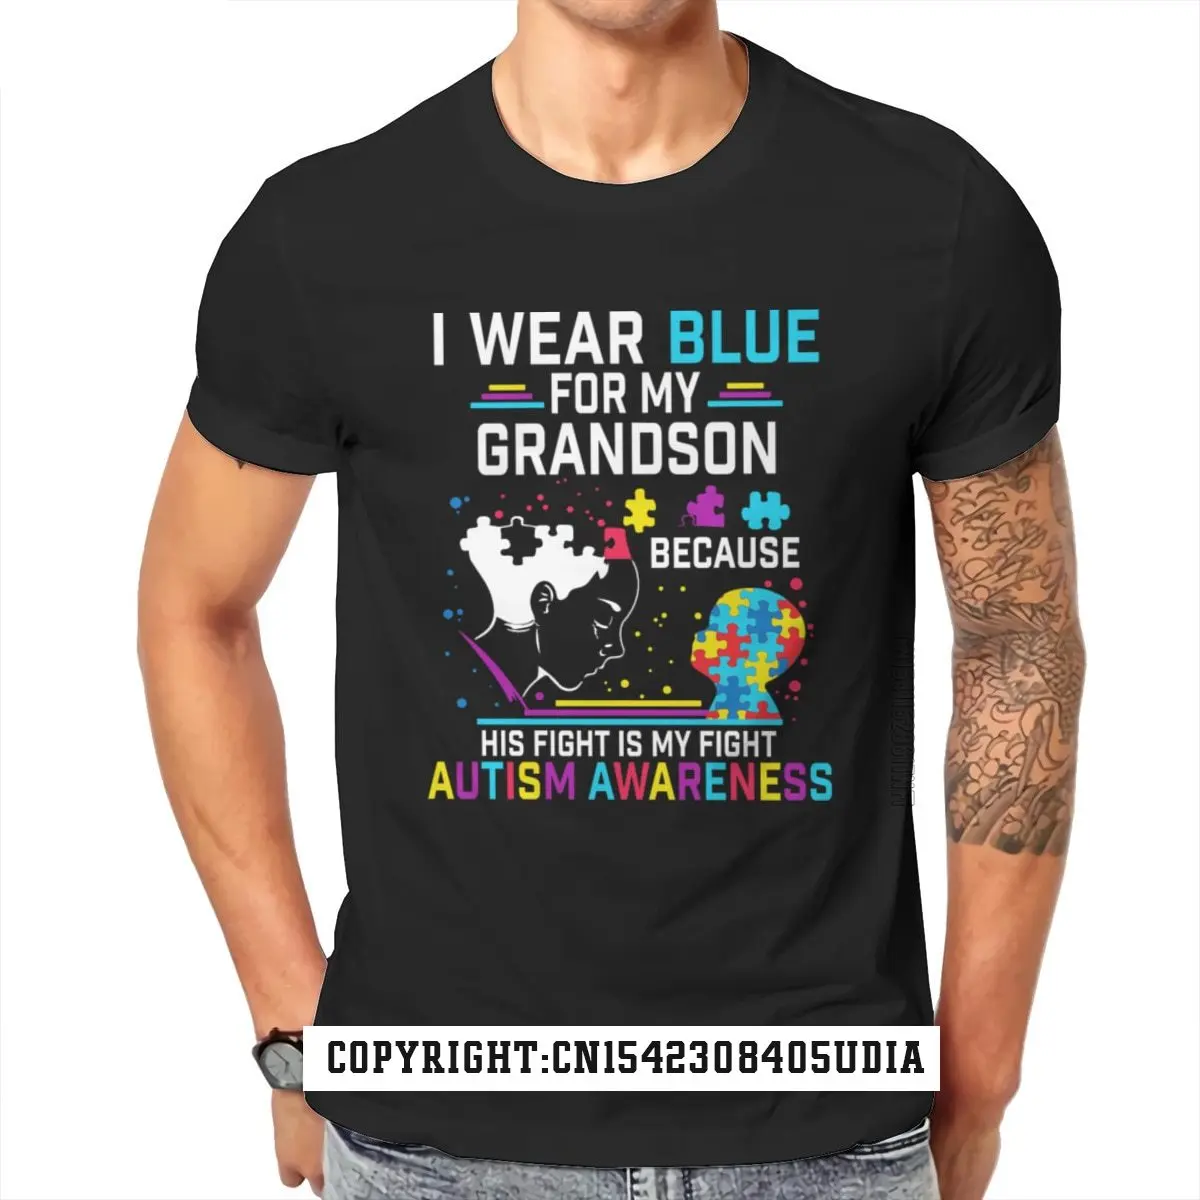 I Wear Blue For My Grandson Autism Awareness Unisex T-Shirt Black Kawaii Vintage Men's Tshirts Latest Tops & Tees Unique